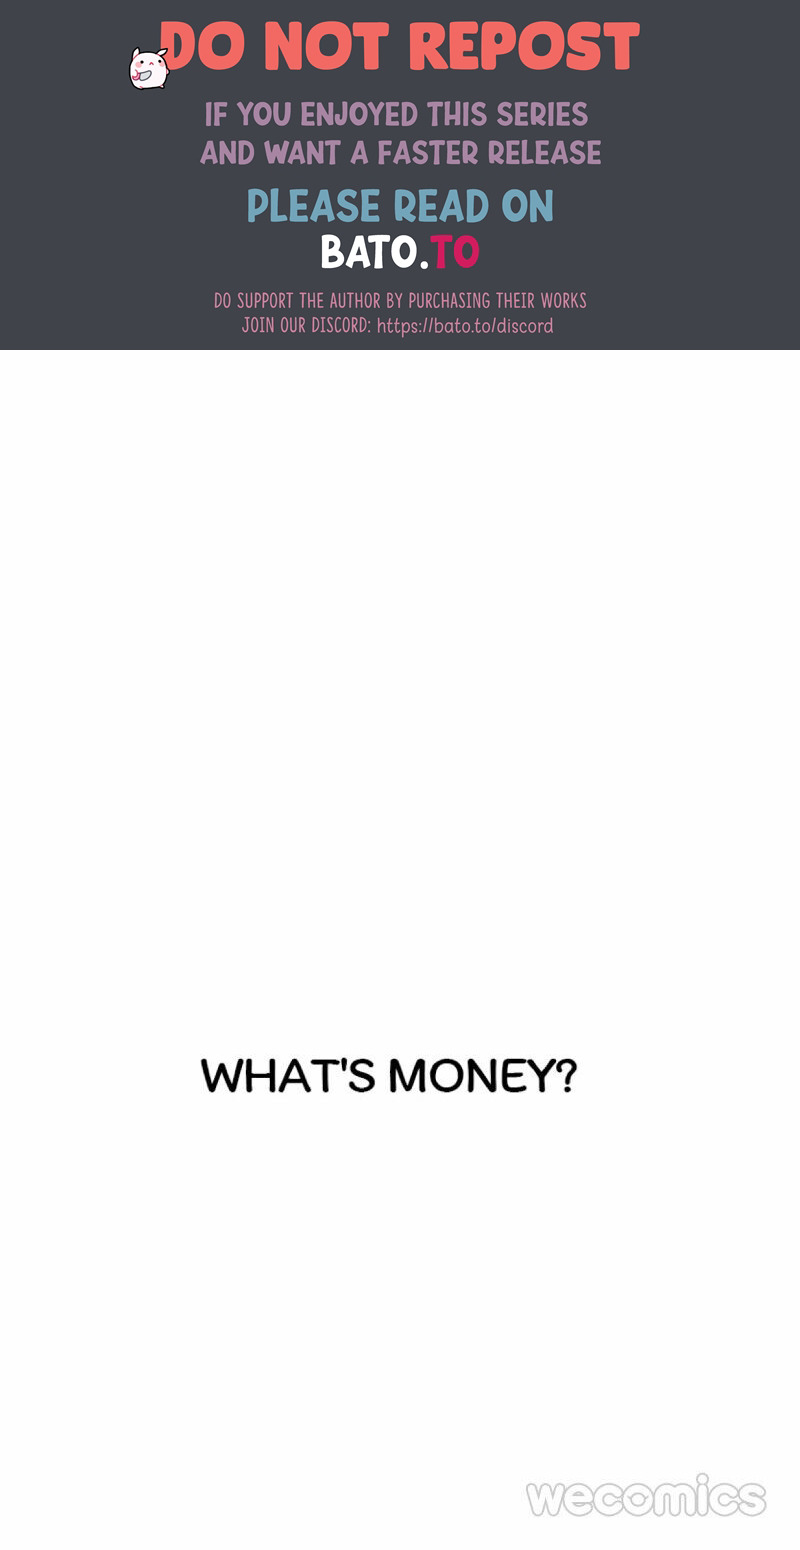 Money City - Page 1